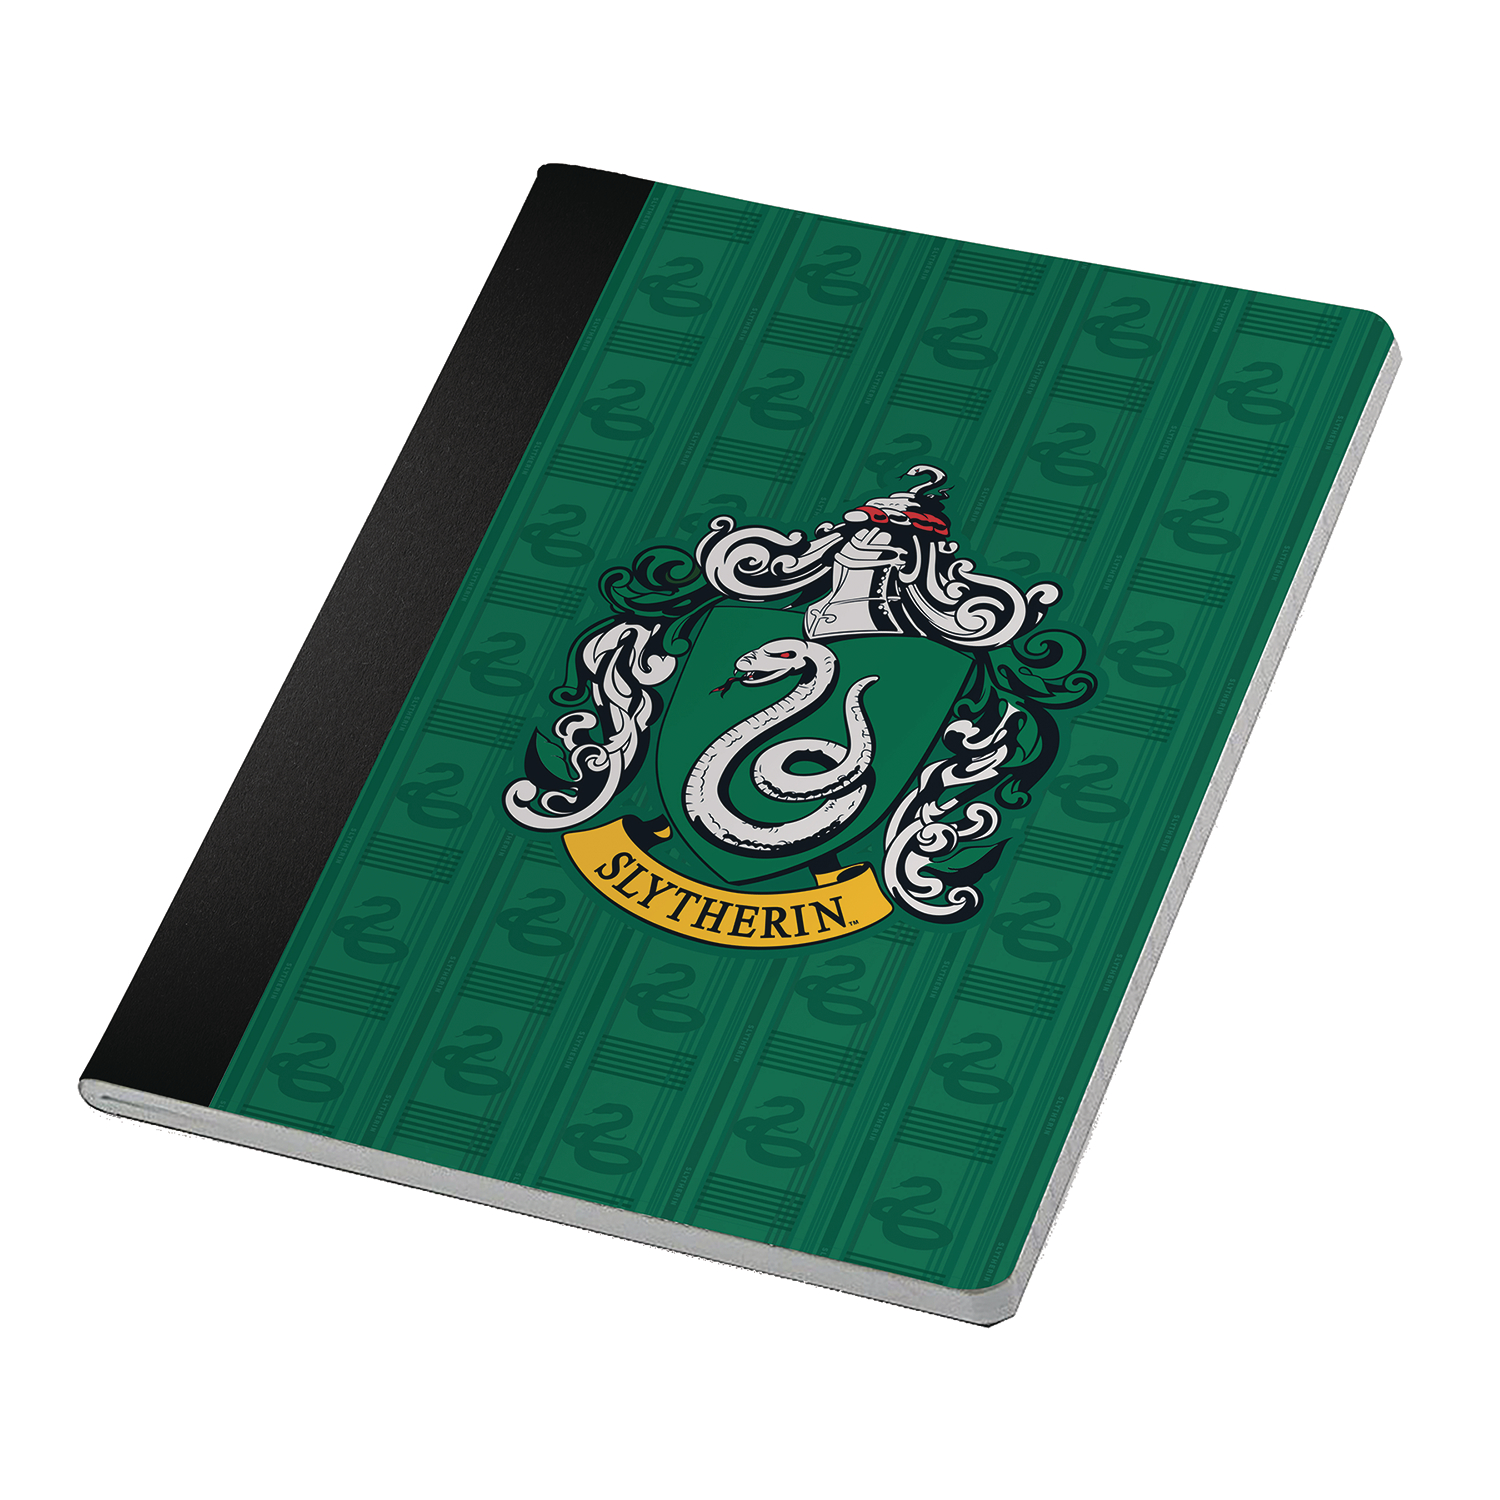 Harry Potter Slytherin Notebook And Page Clip Set